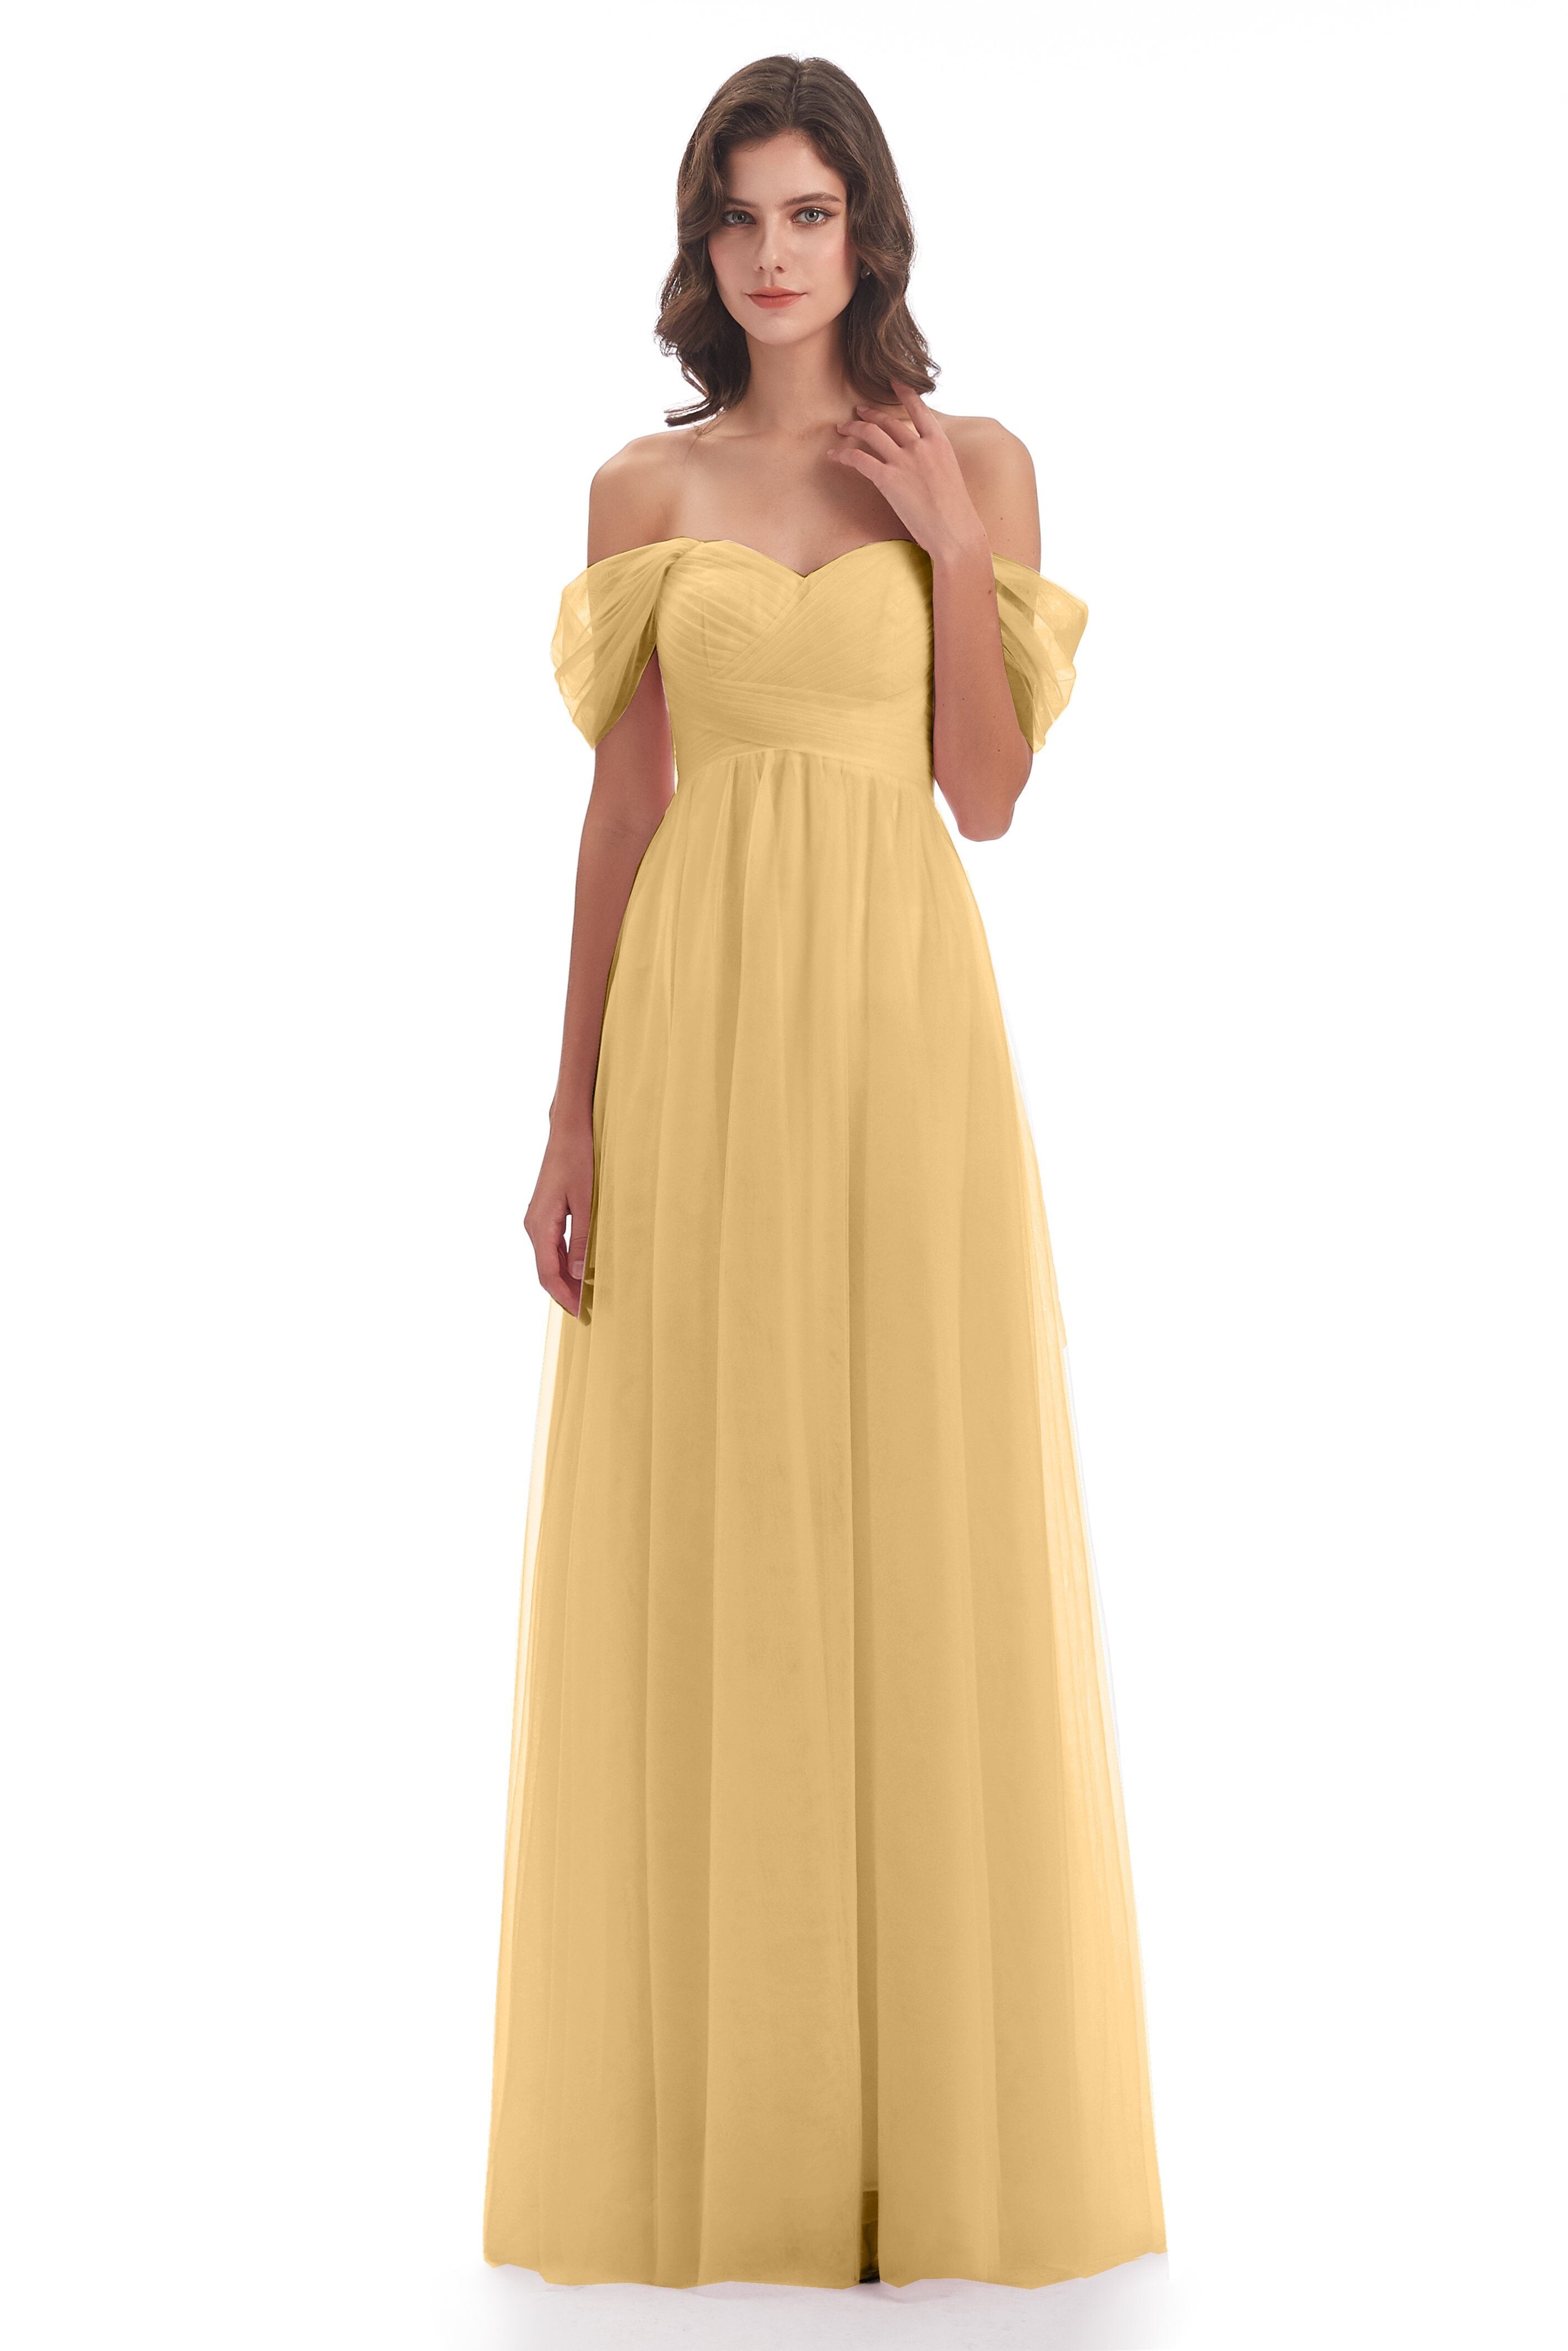 Aria Gold Bridesmaid Dress by Ciccinia